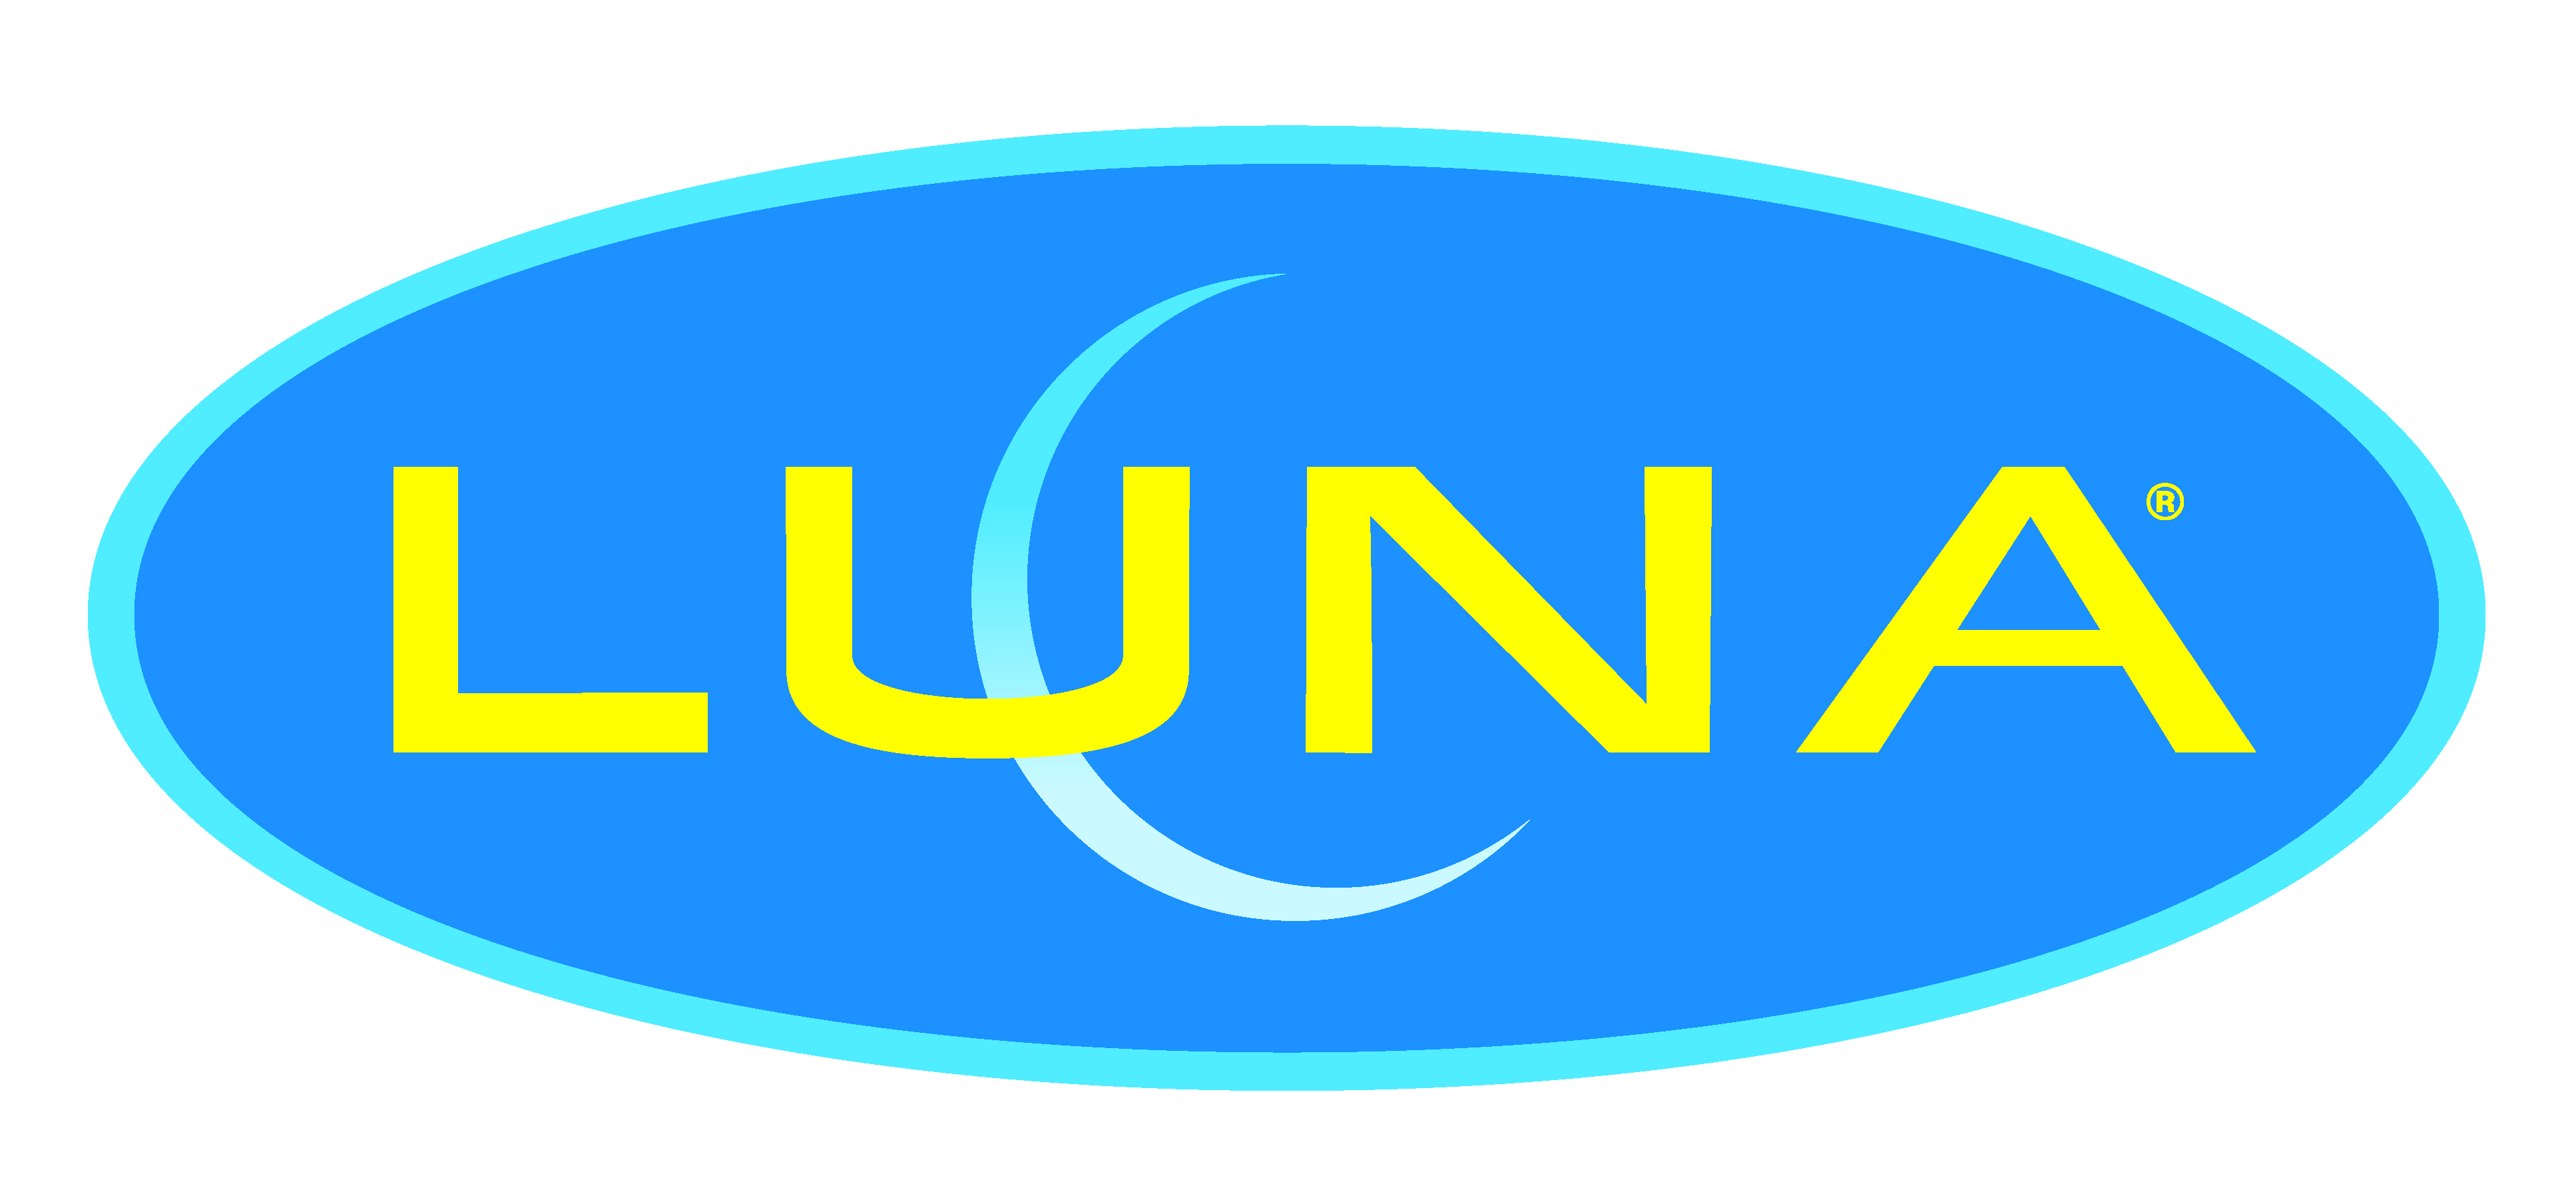 Luna Bar